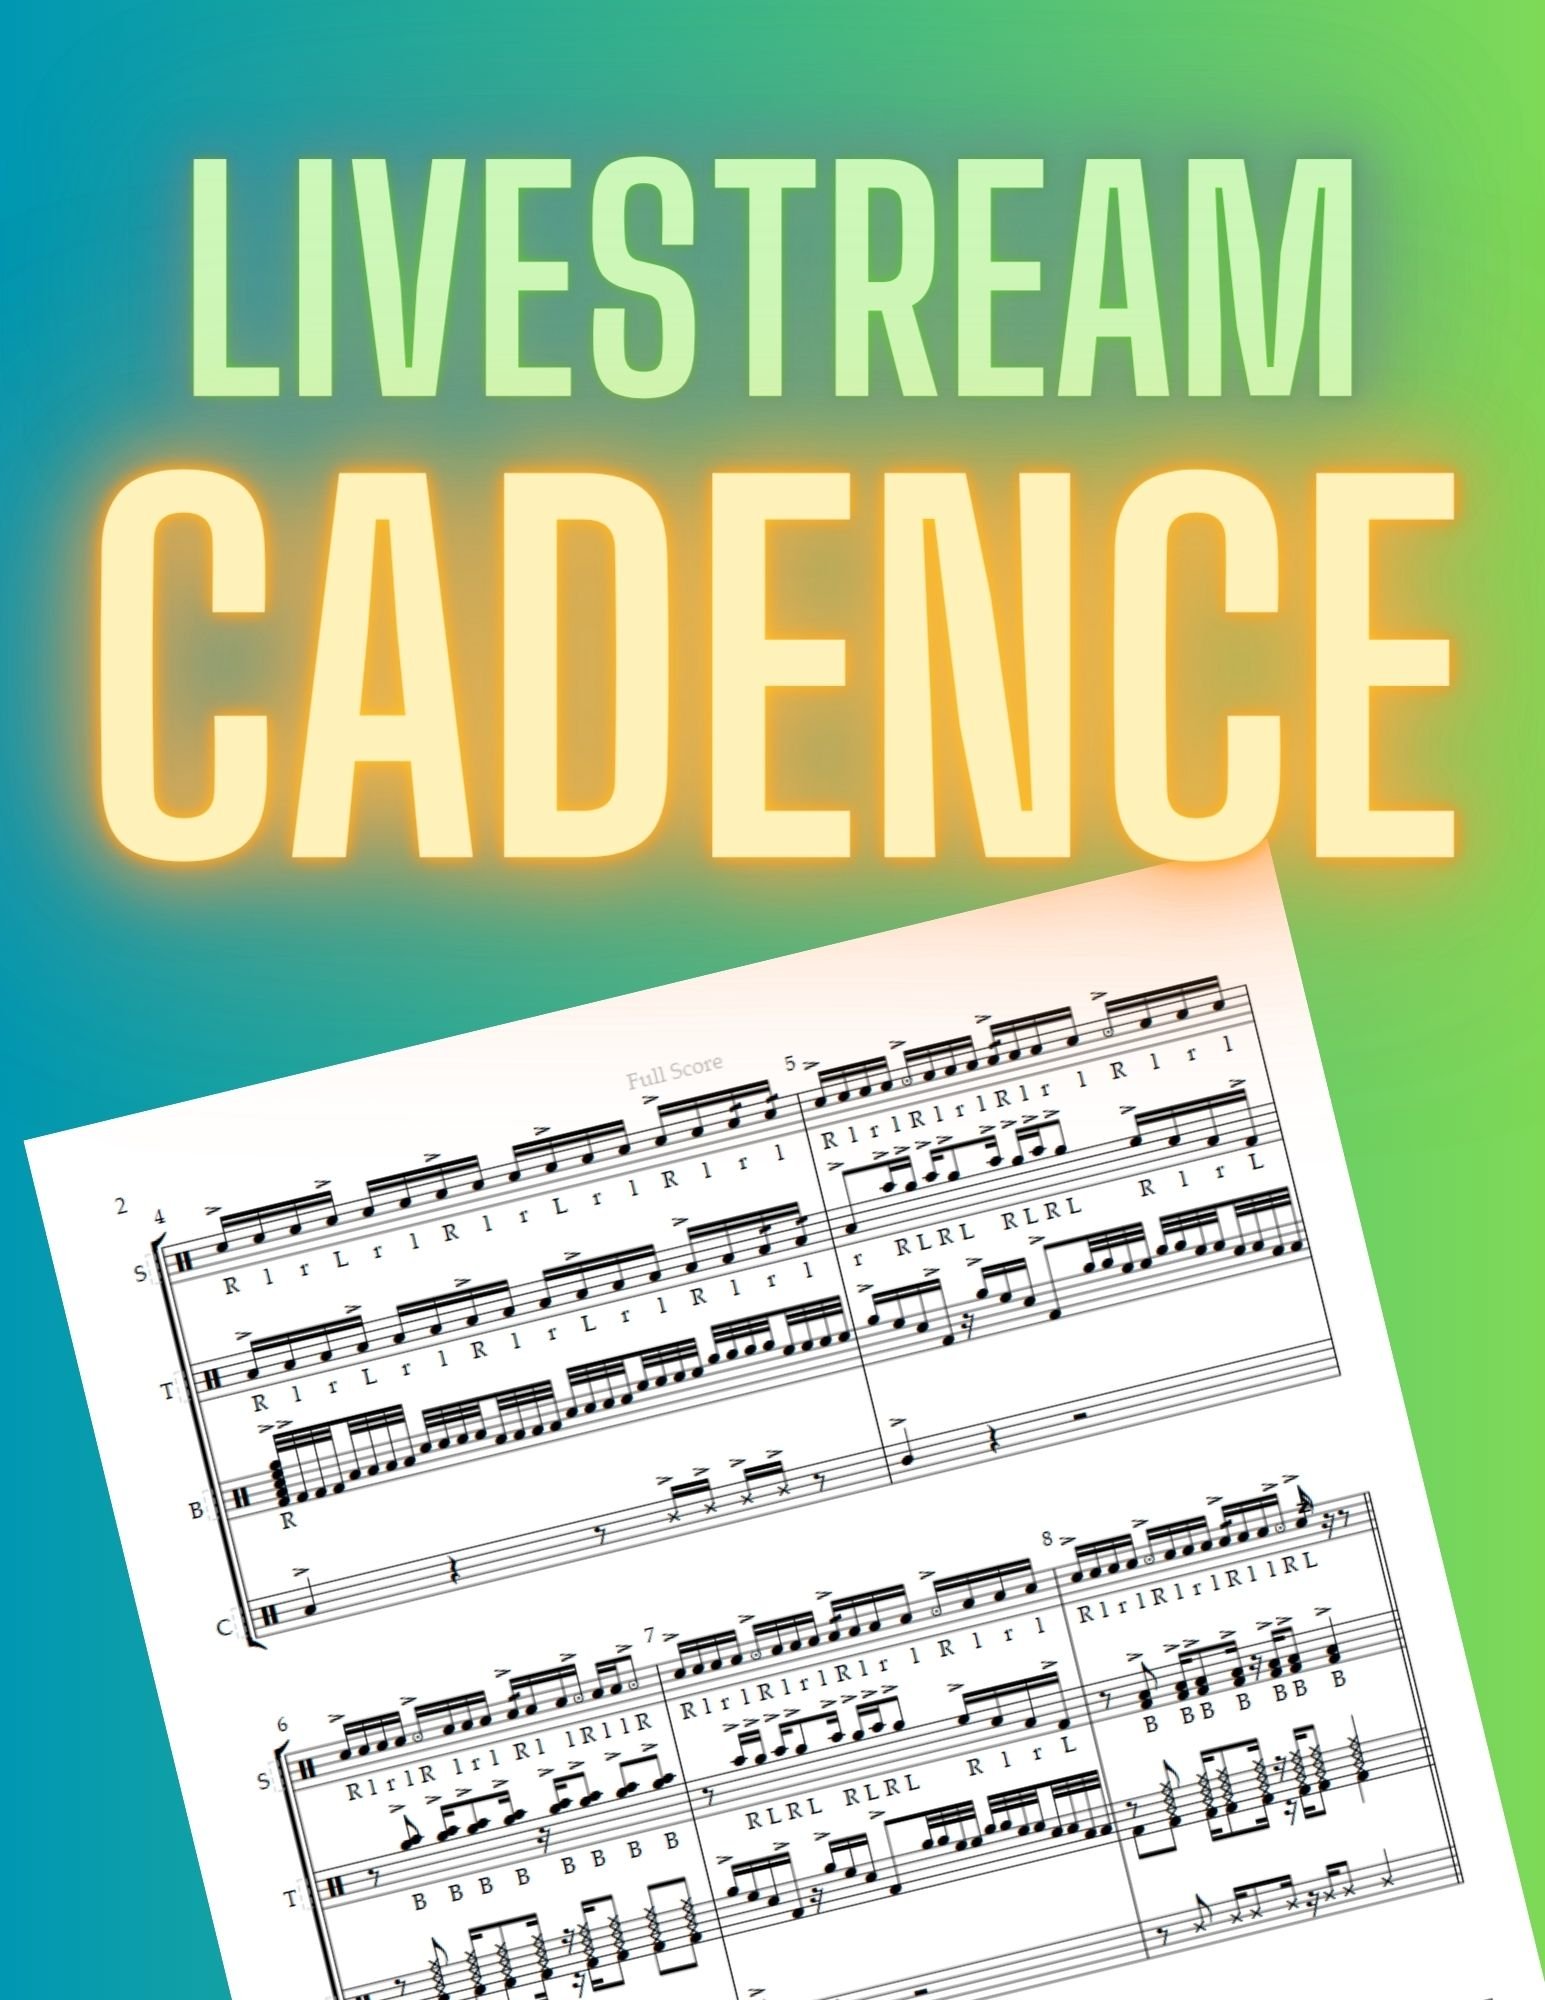 Livestream Cadence Portrait (1).jpg